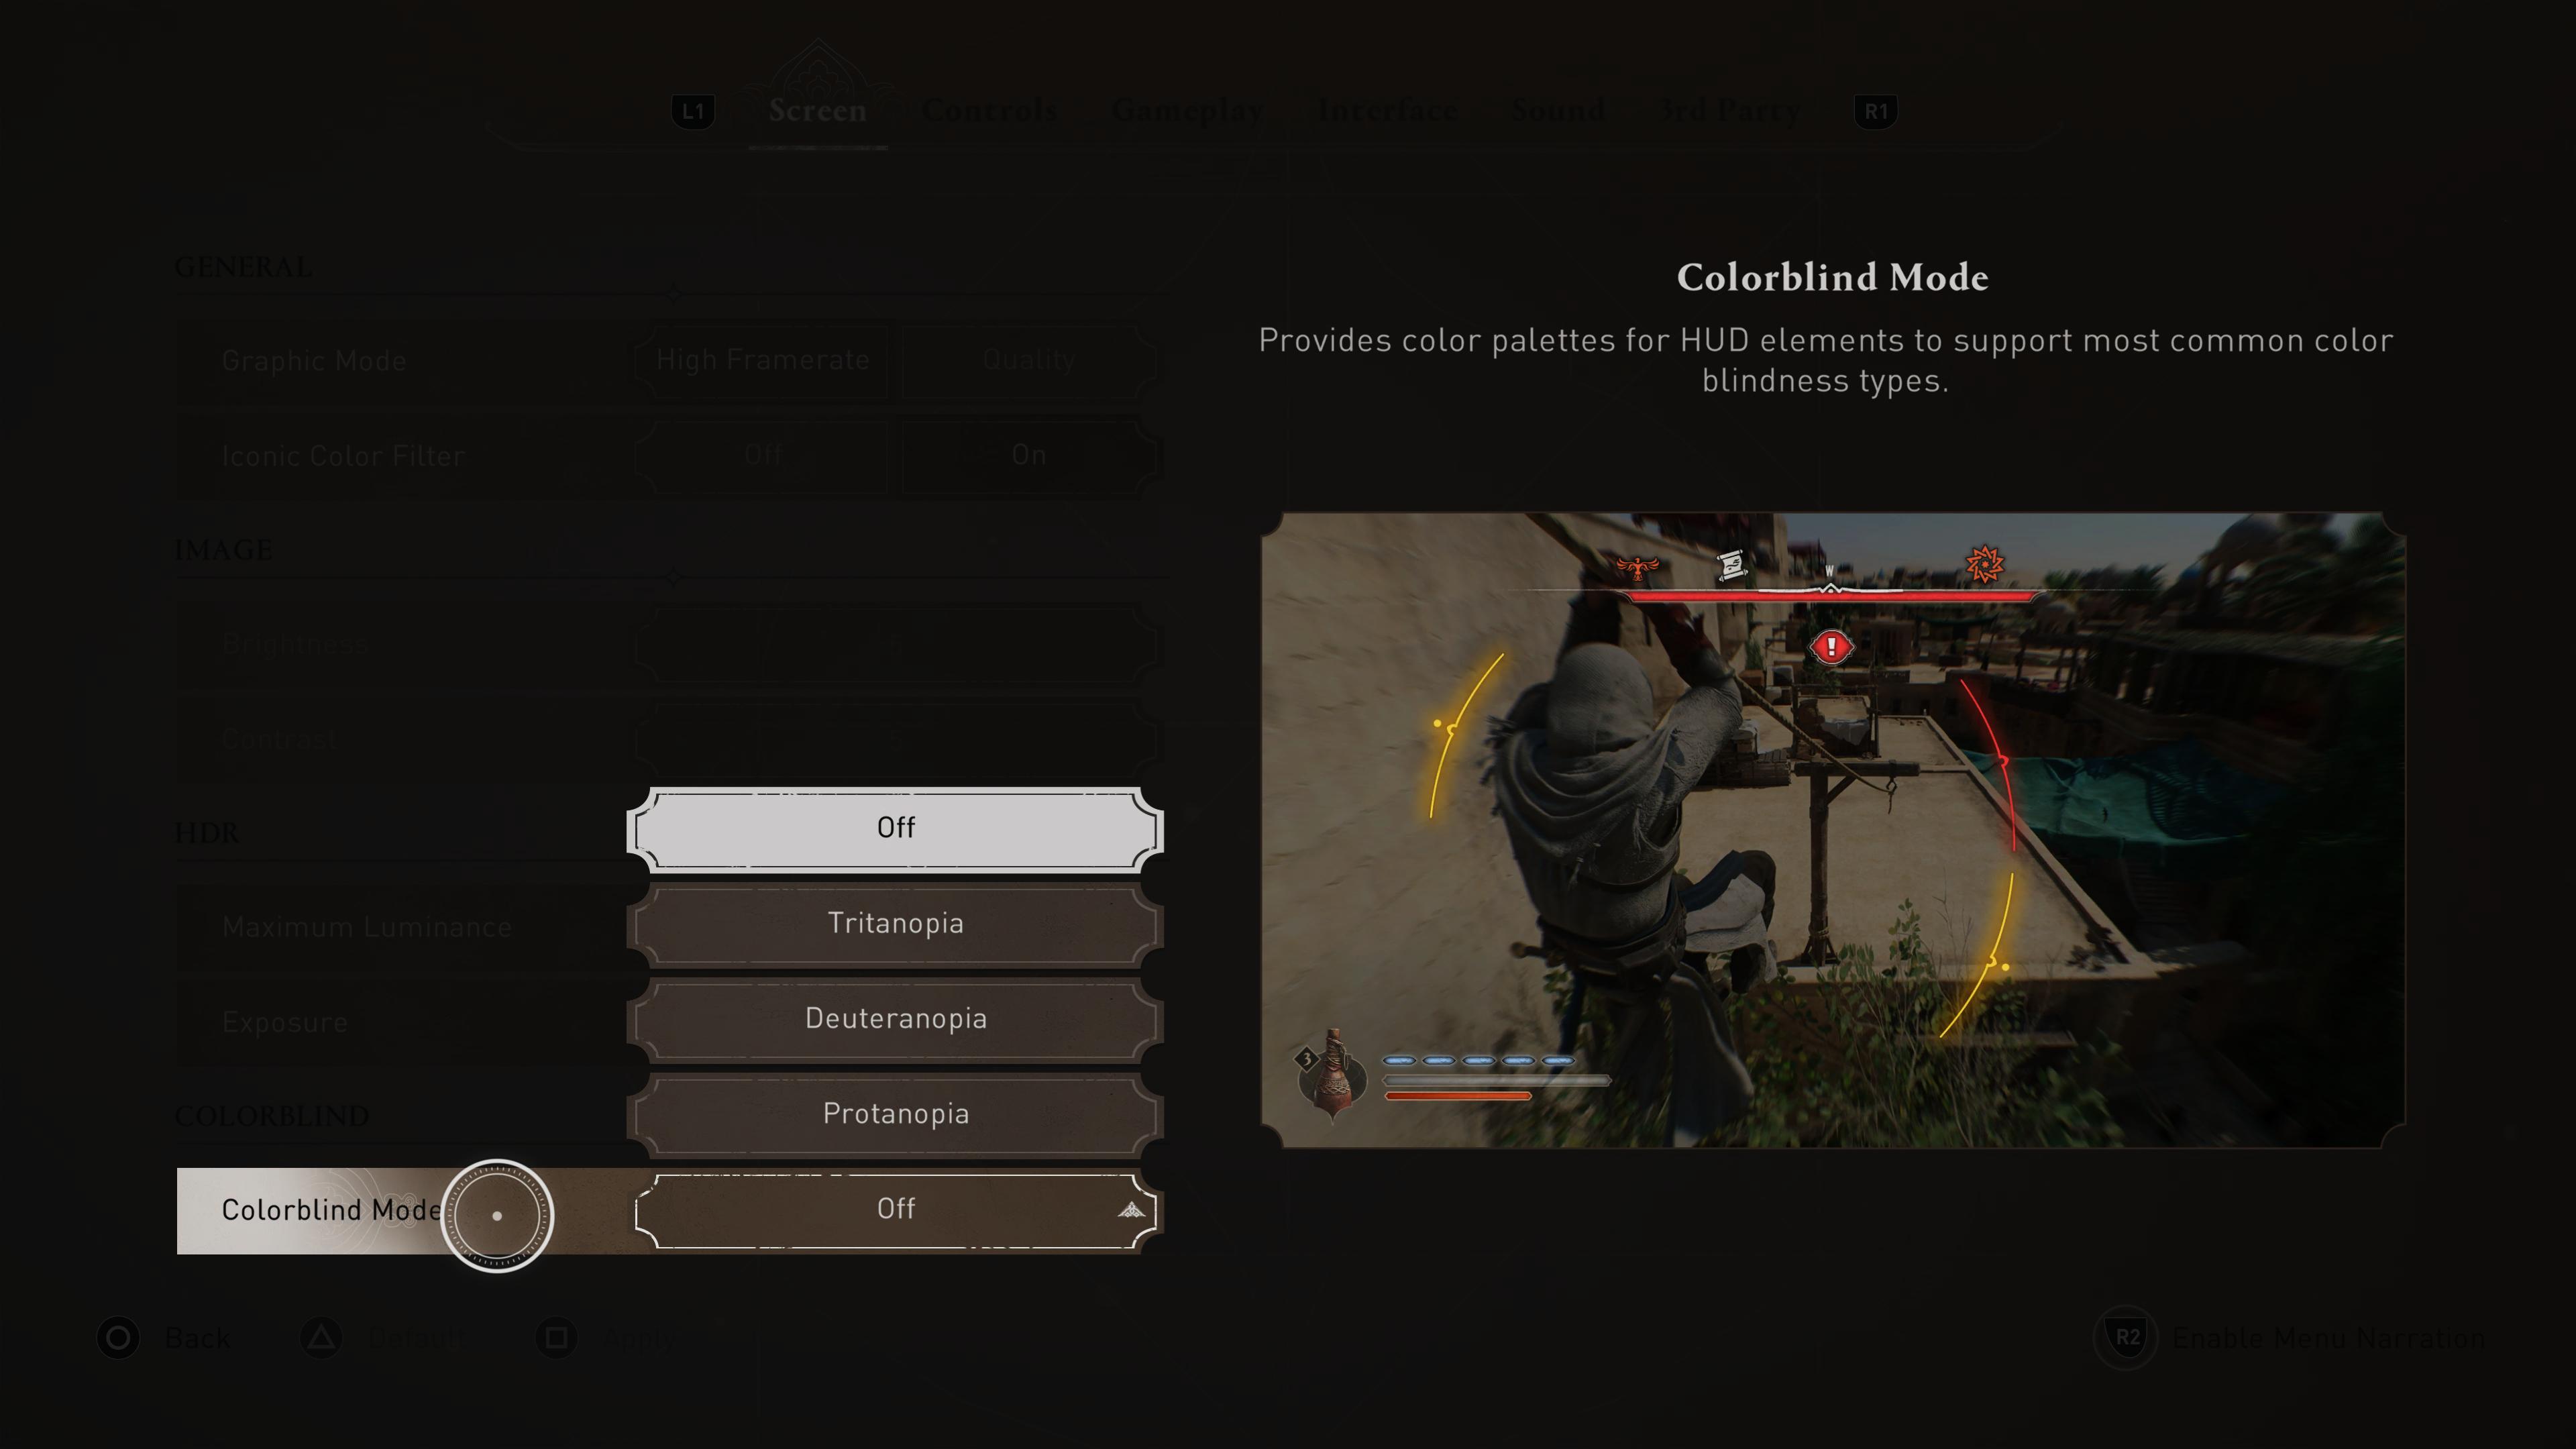 Screenshots of menus from Assassin's Creed Mirage